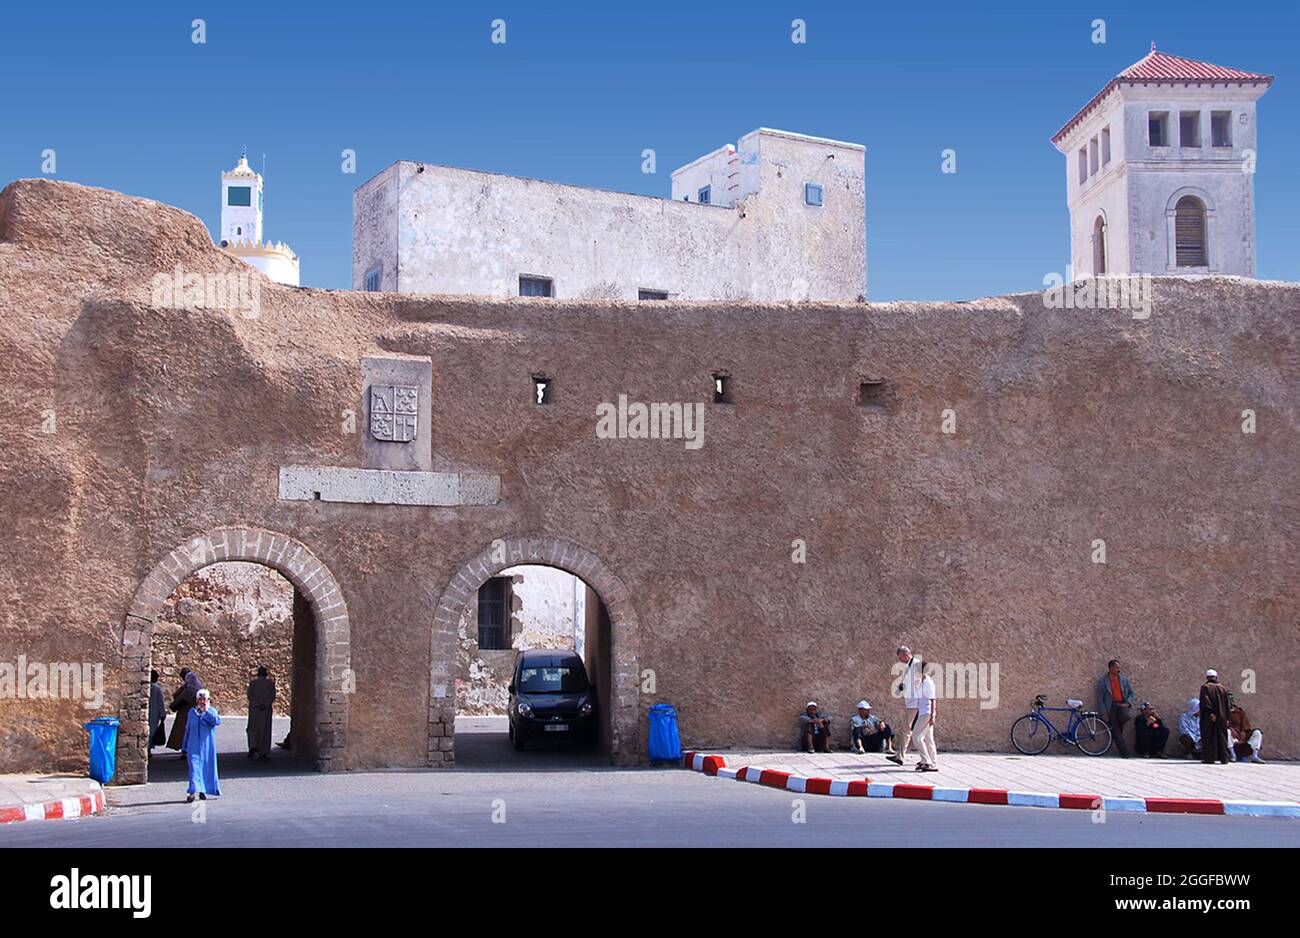 Alte portugiesische Architektur in El Jadida (Mazagan) in Marokko Stockfoto